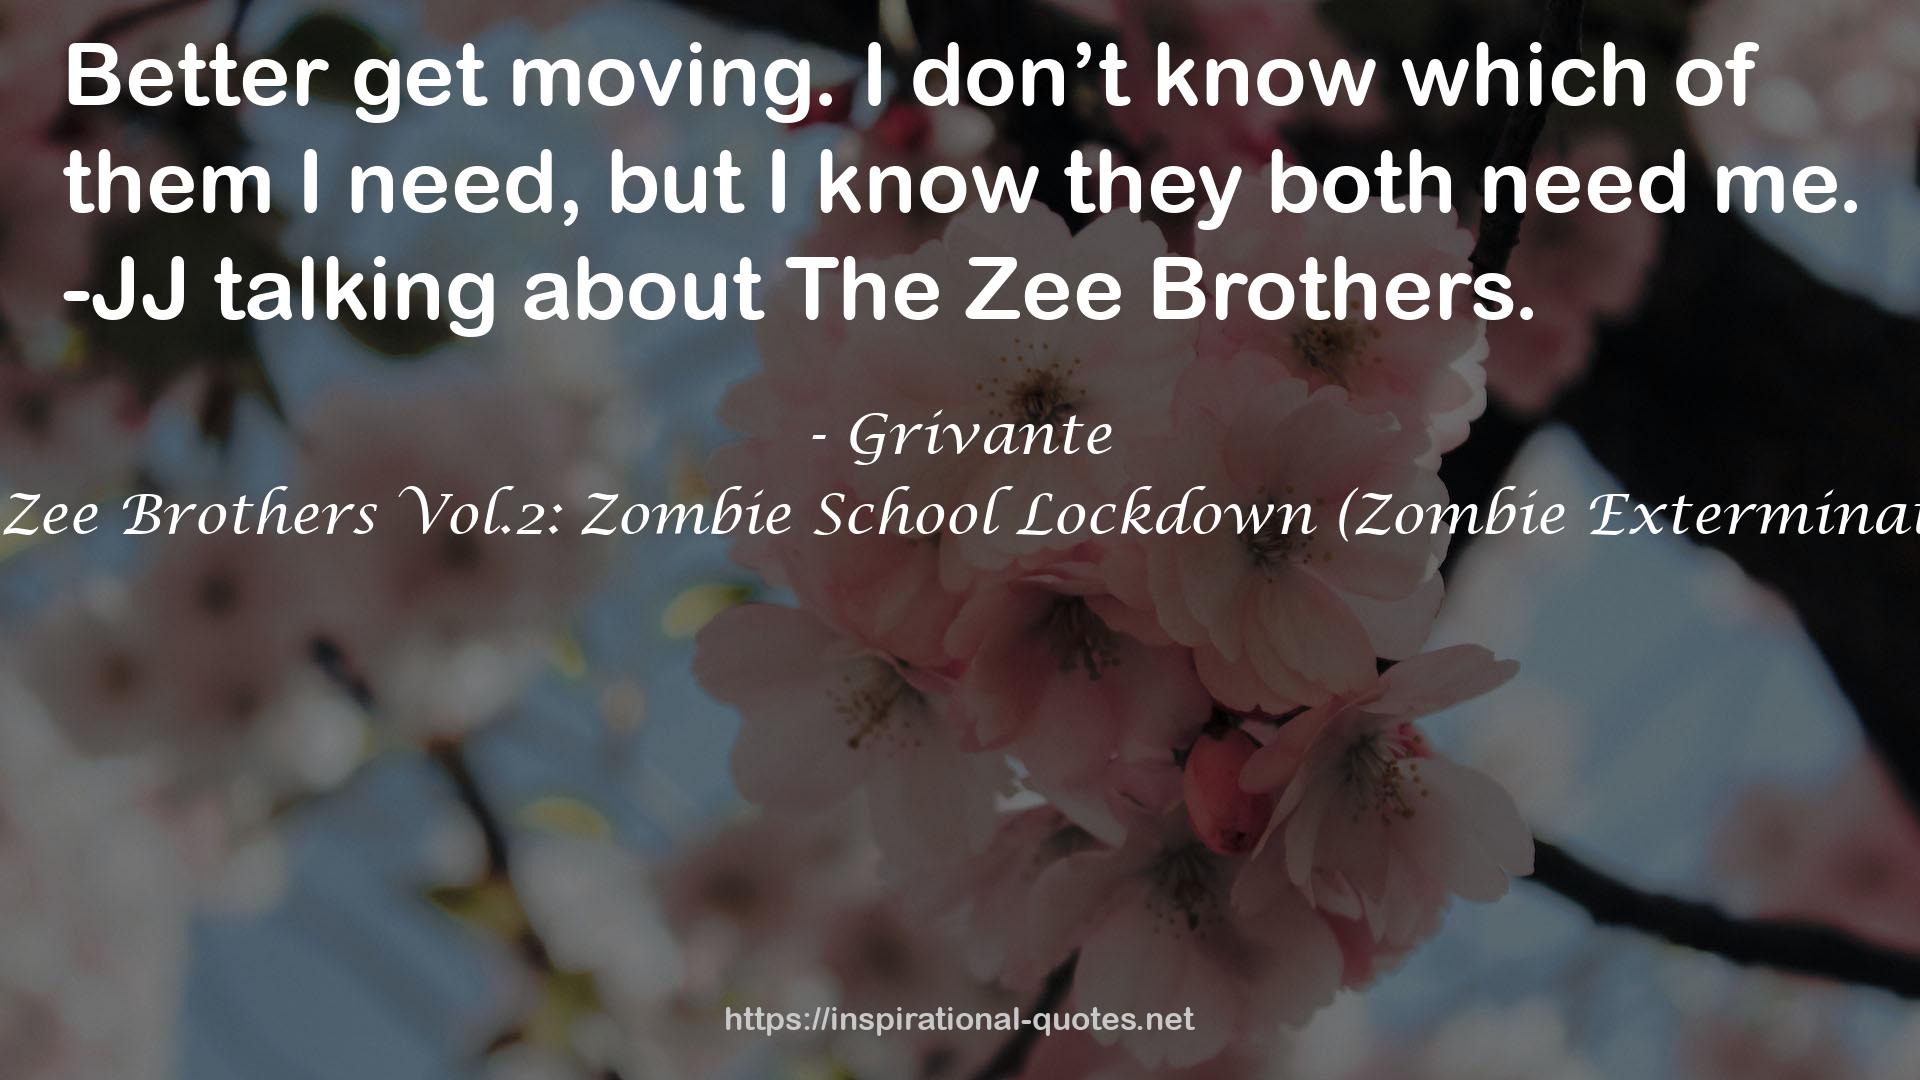 The Zee Brothers Vol.2: Zombie School Lockdown (Zombie Exterminators) QUOTES